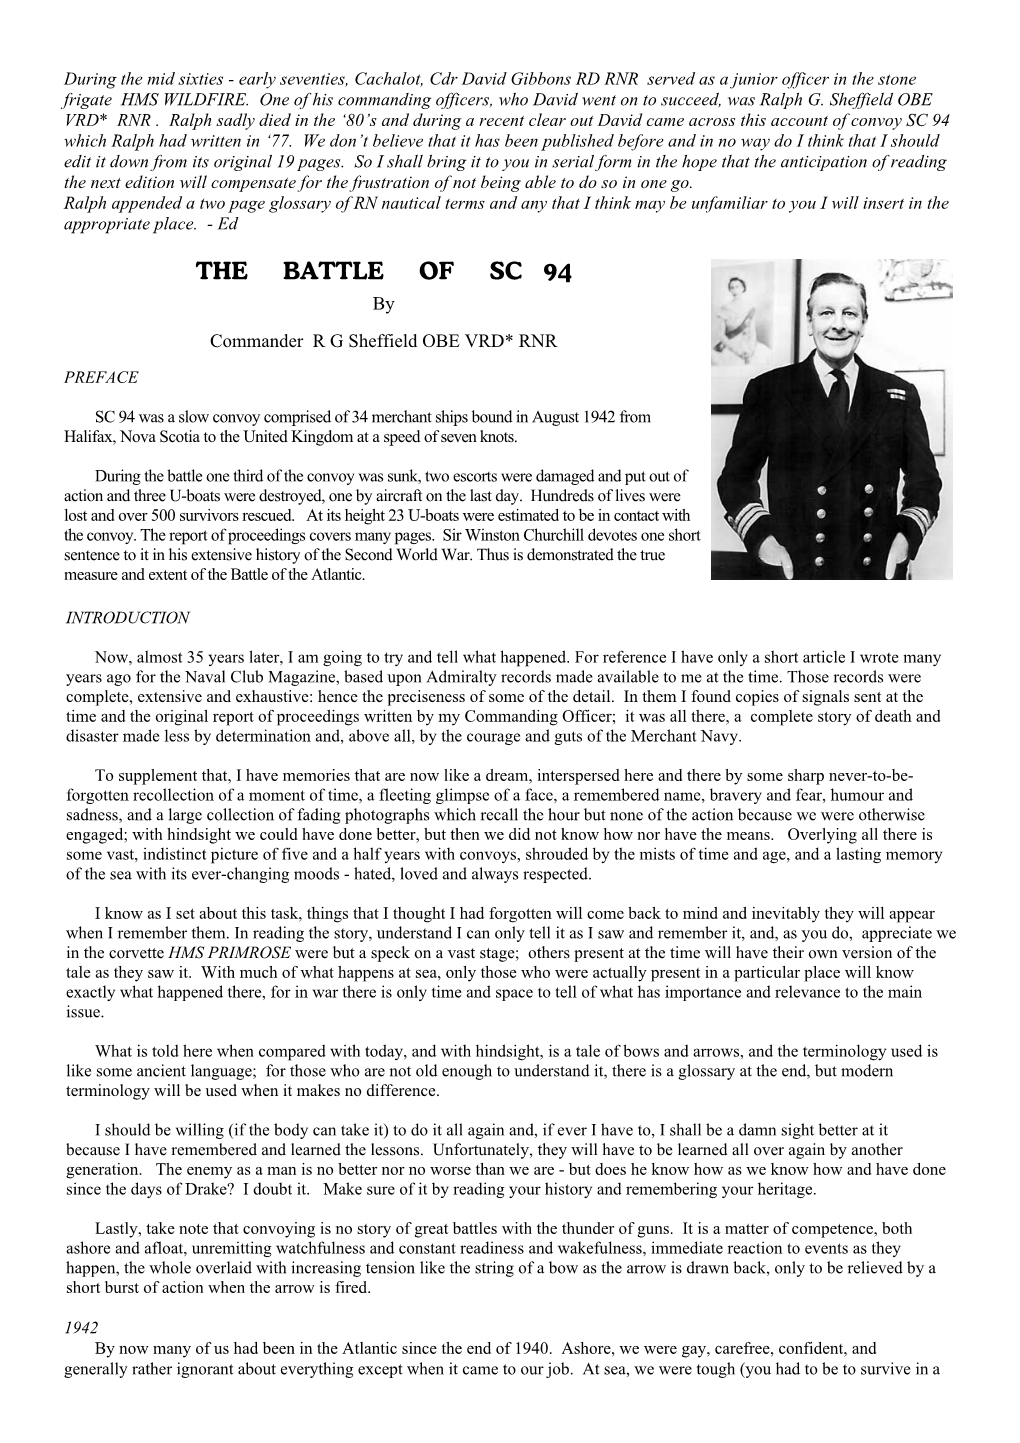 THE BATTLE of SC 94 by Commander R G Sheffield OBE VRD* RNR